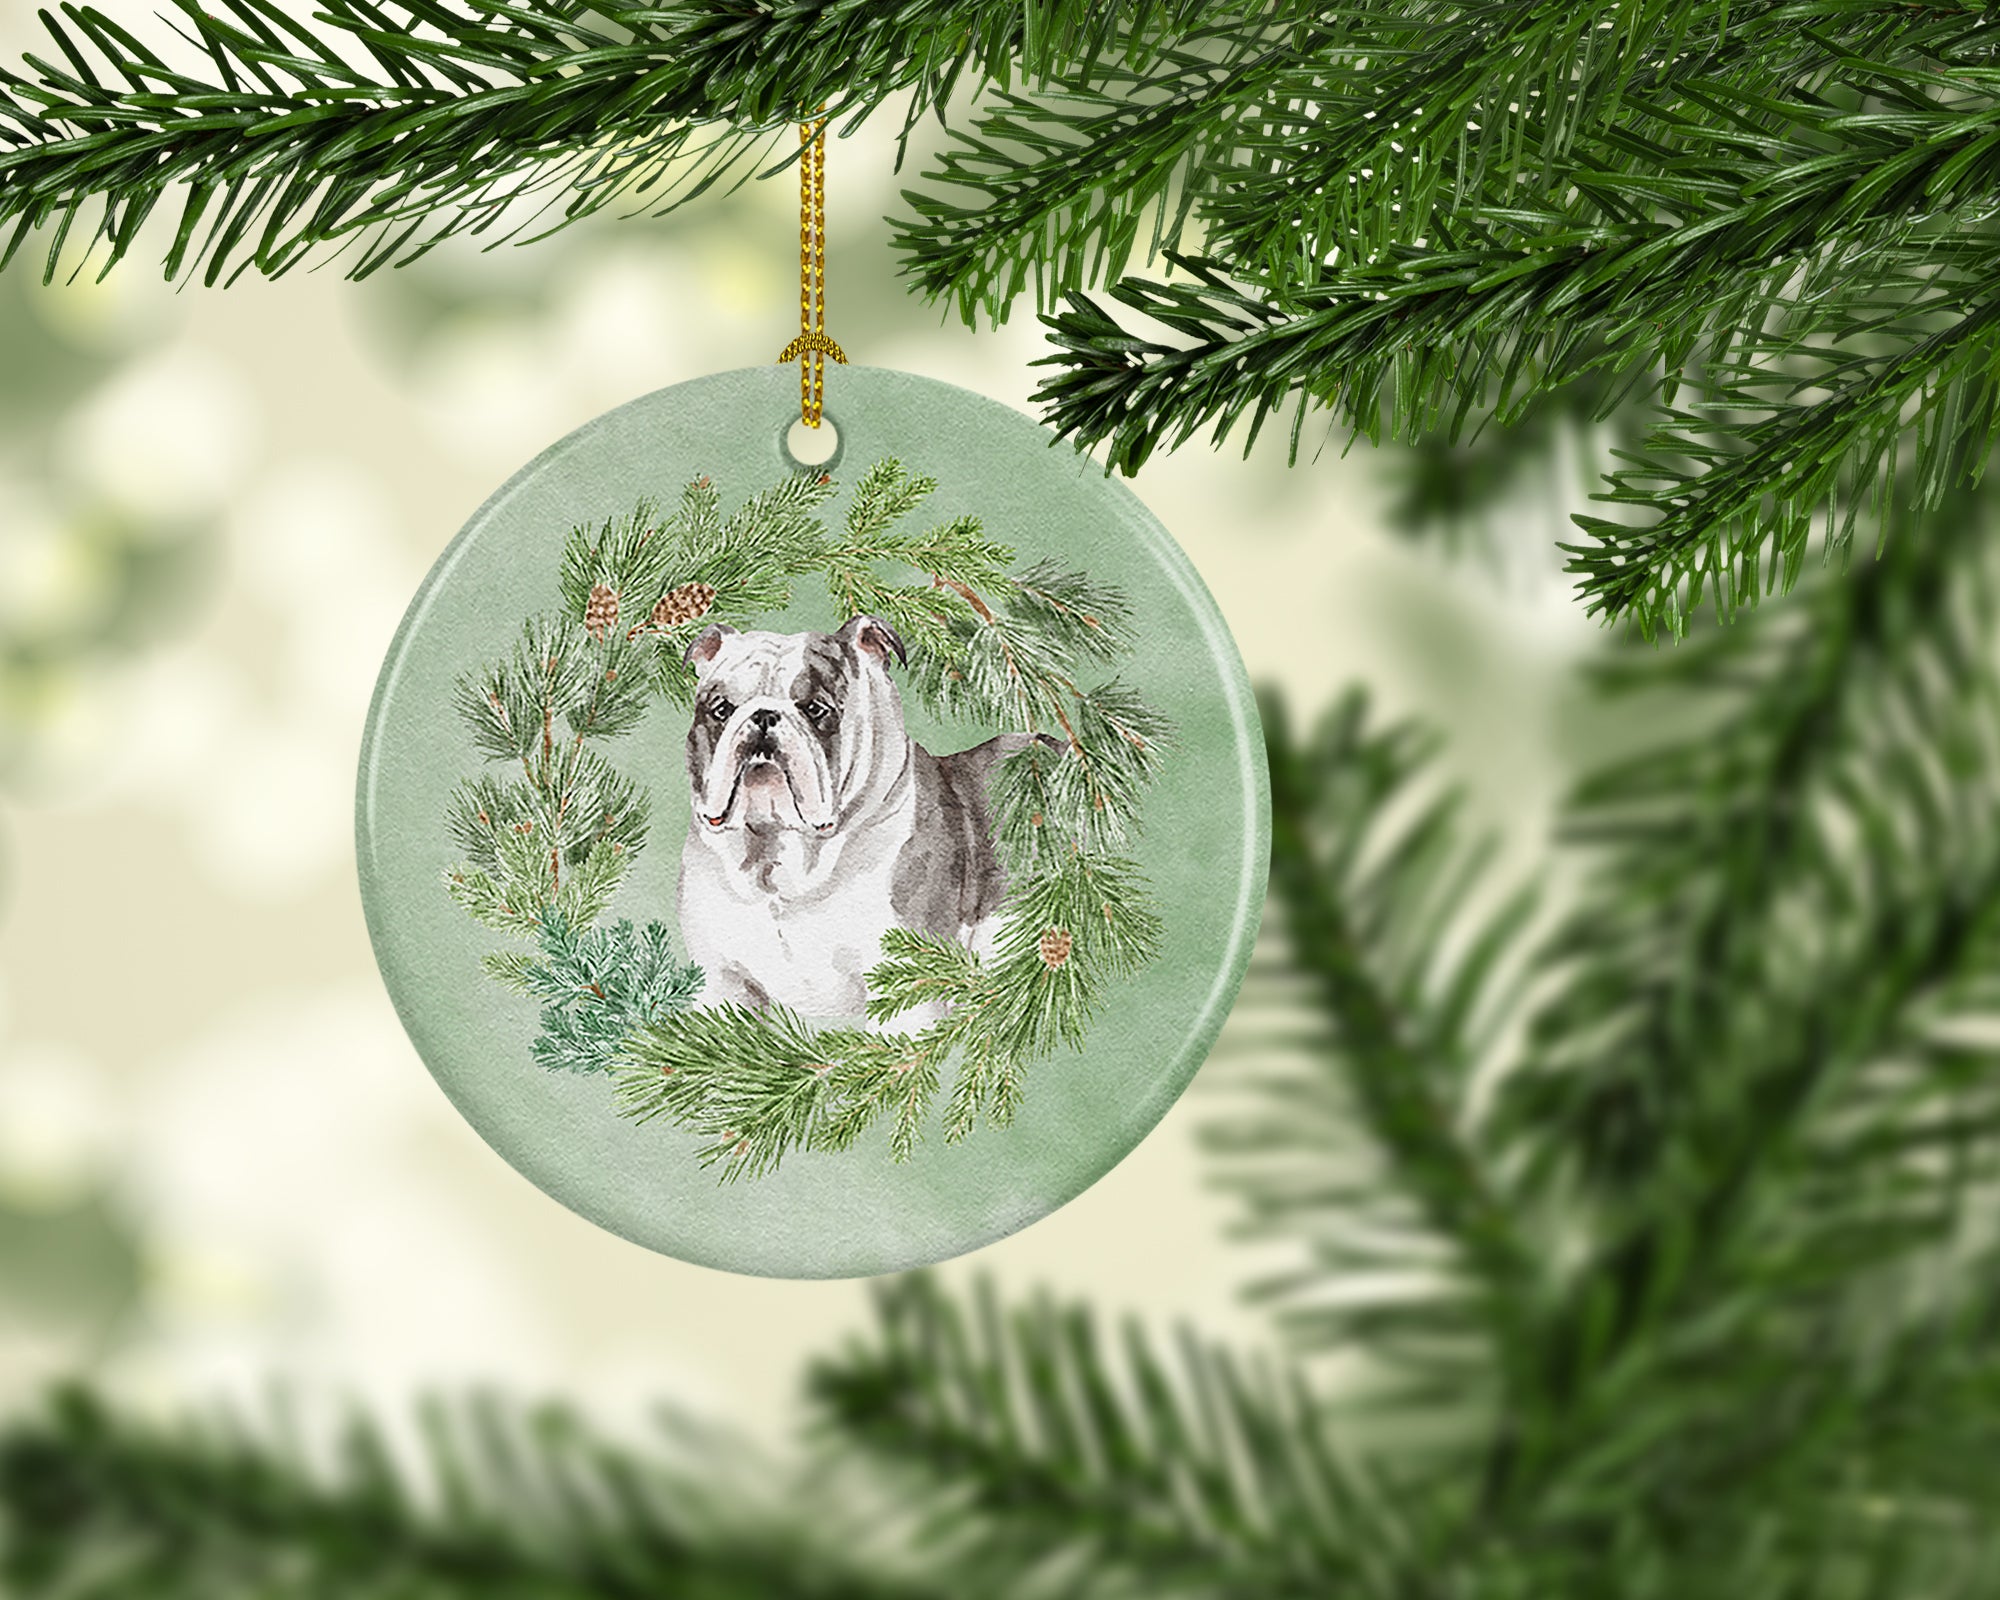 Buy this Bulldog Brindled Christmas Wreath Ceramic Ornament